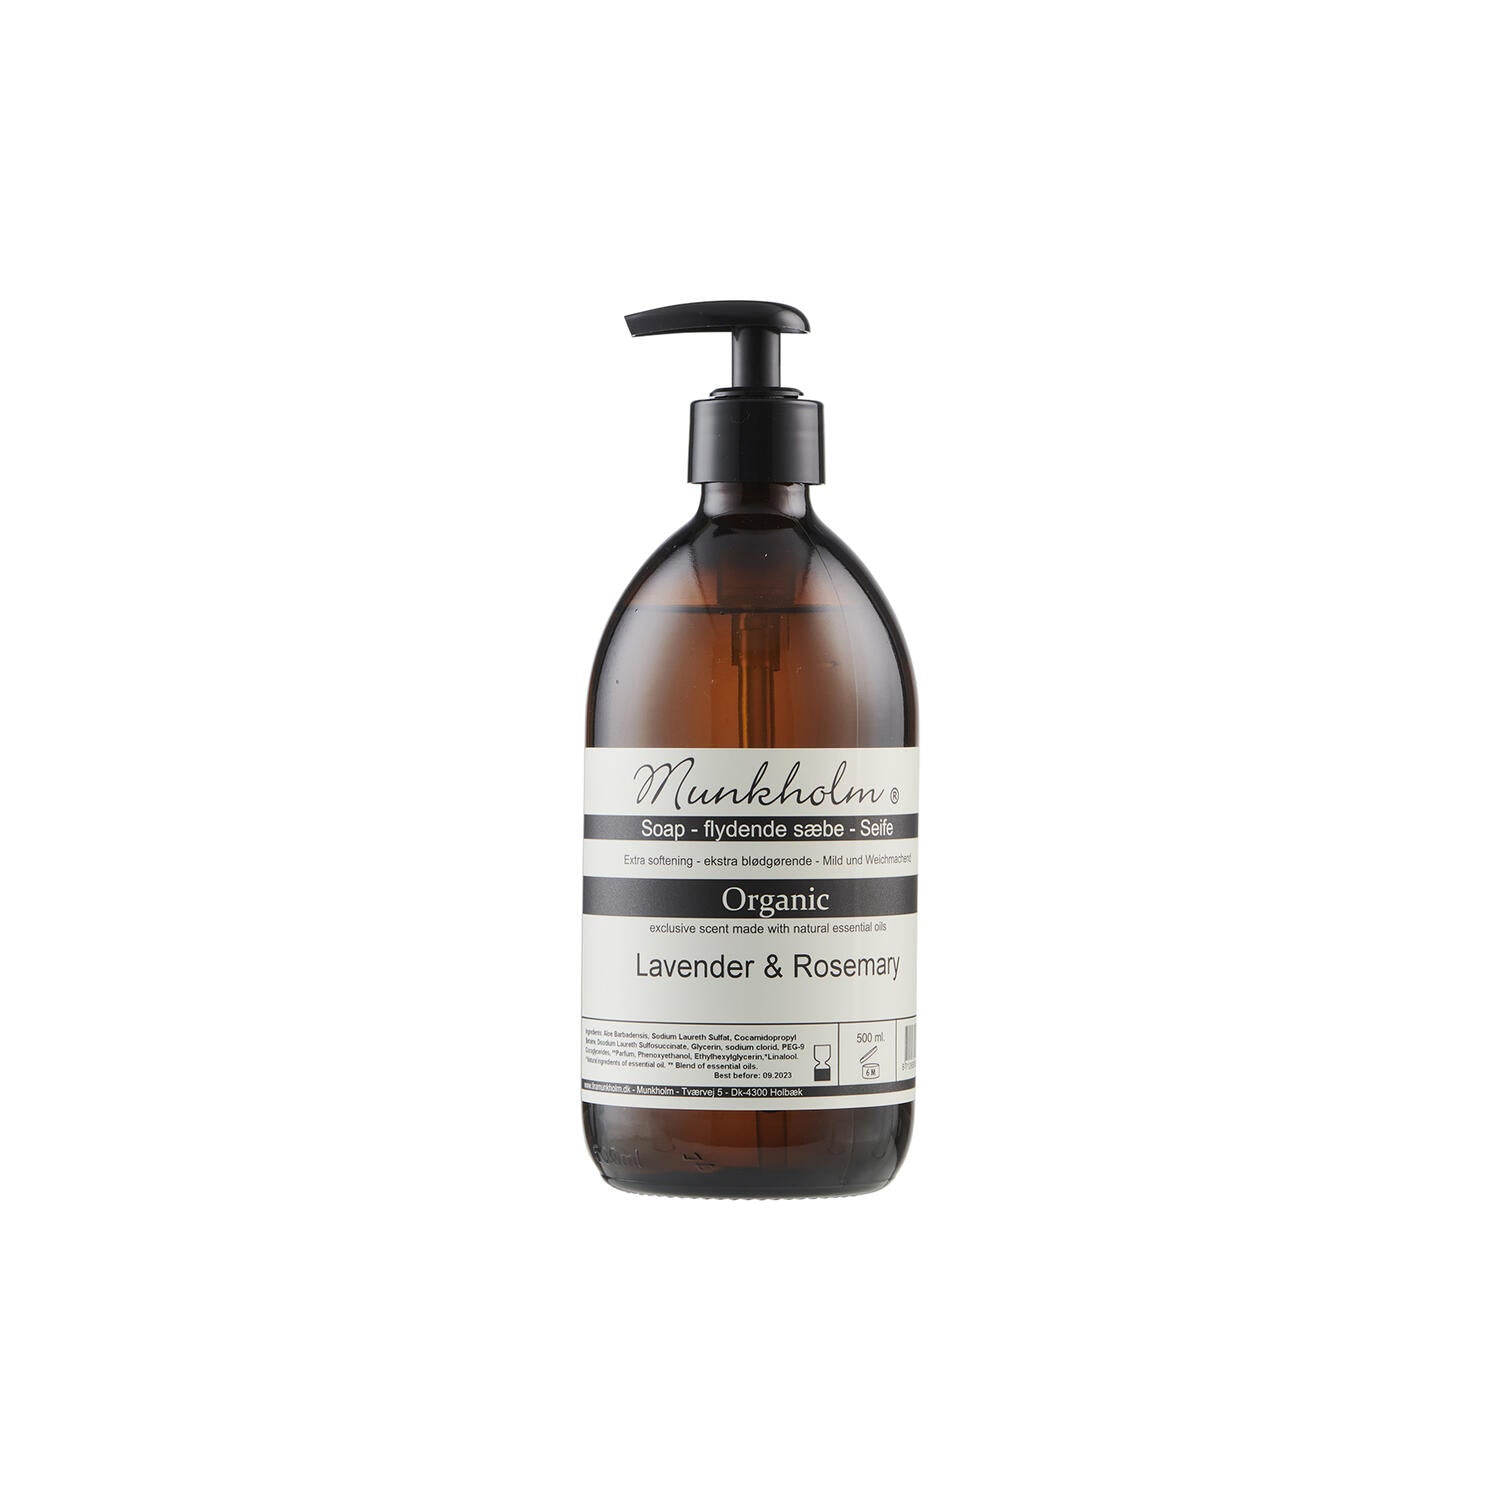 Munkholm Organic Soap 500ml - Lavender & Rosemary